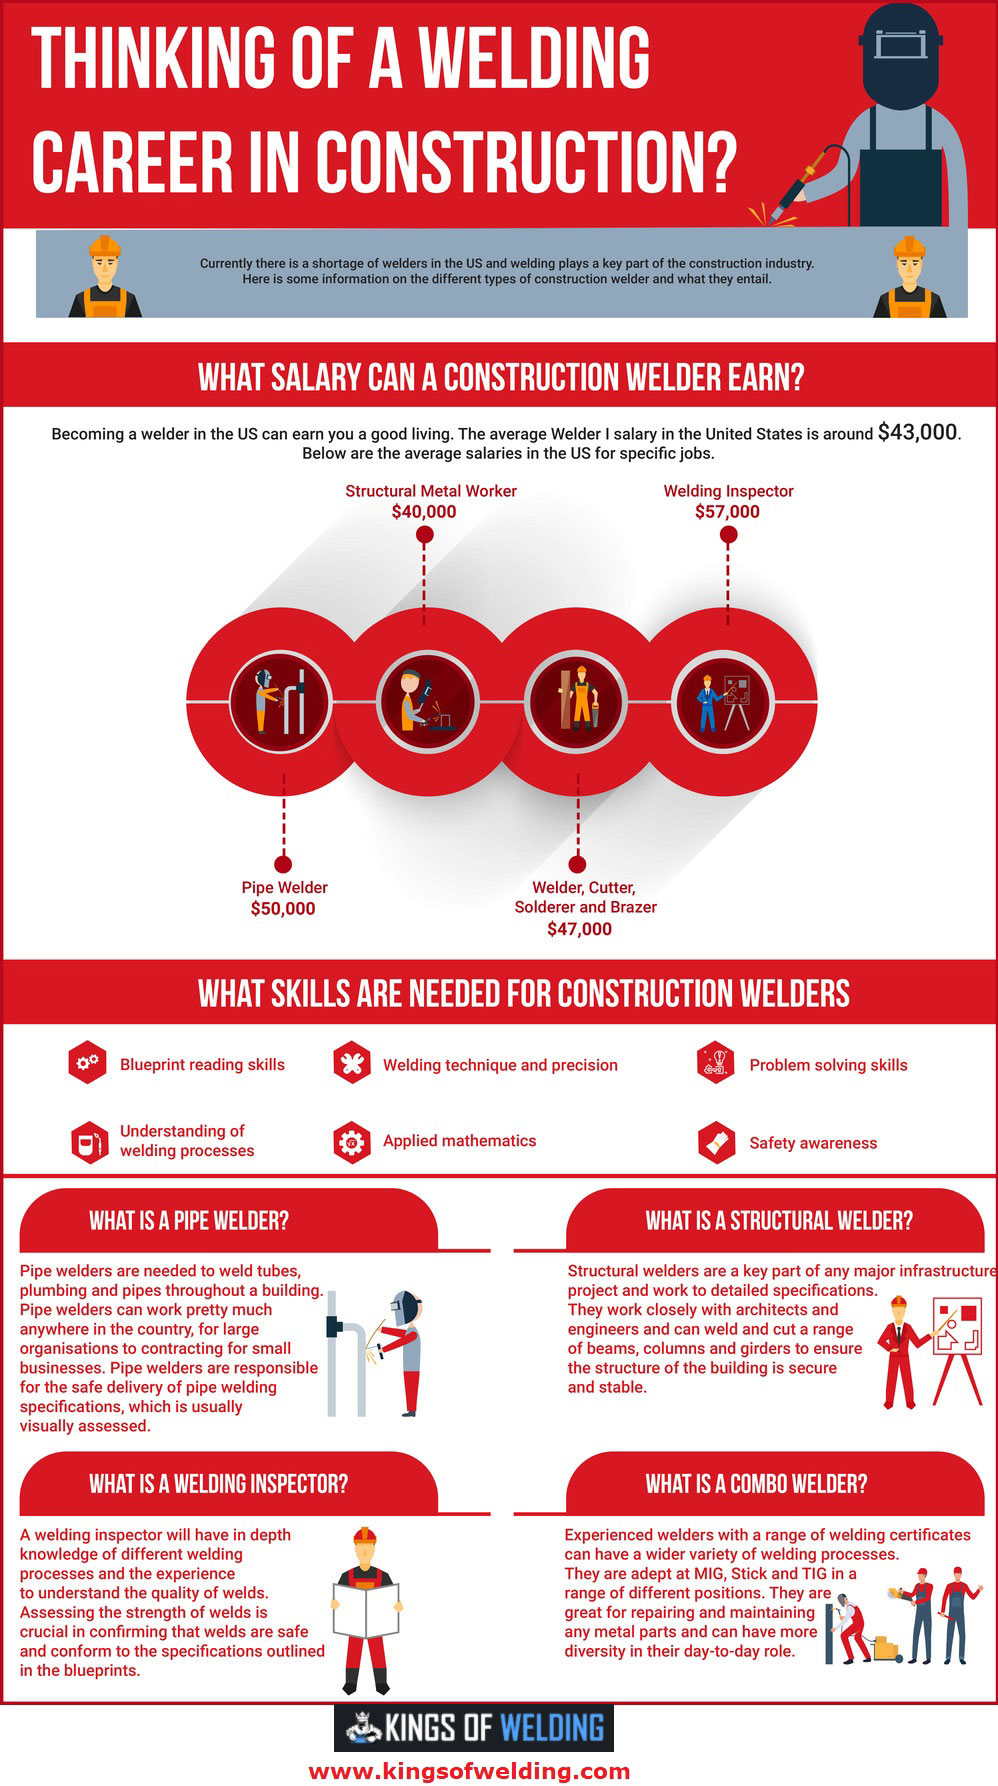 welding career in construction infographic